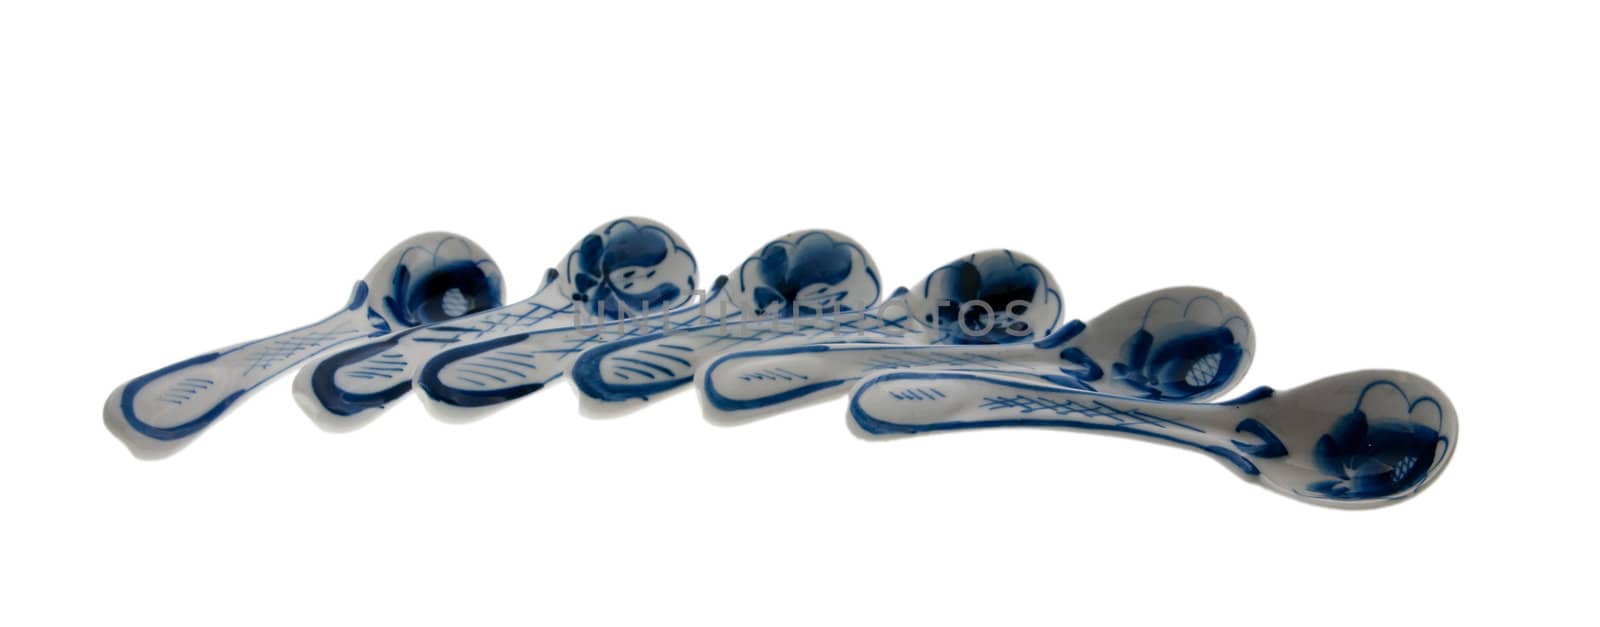 ceramic spoones (gzhel art) by dyvan